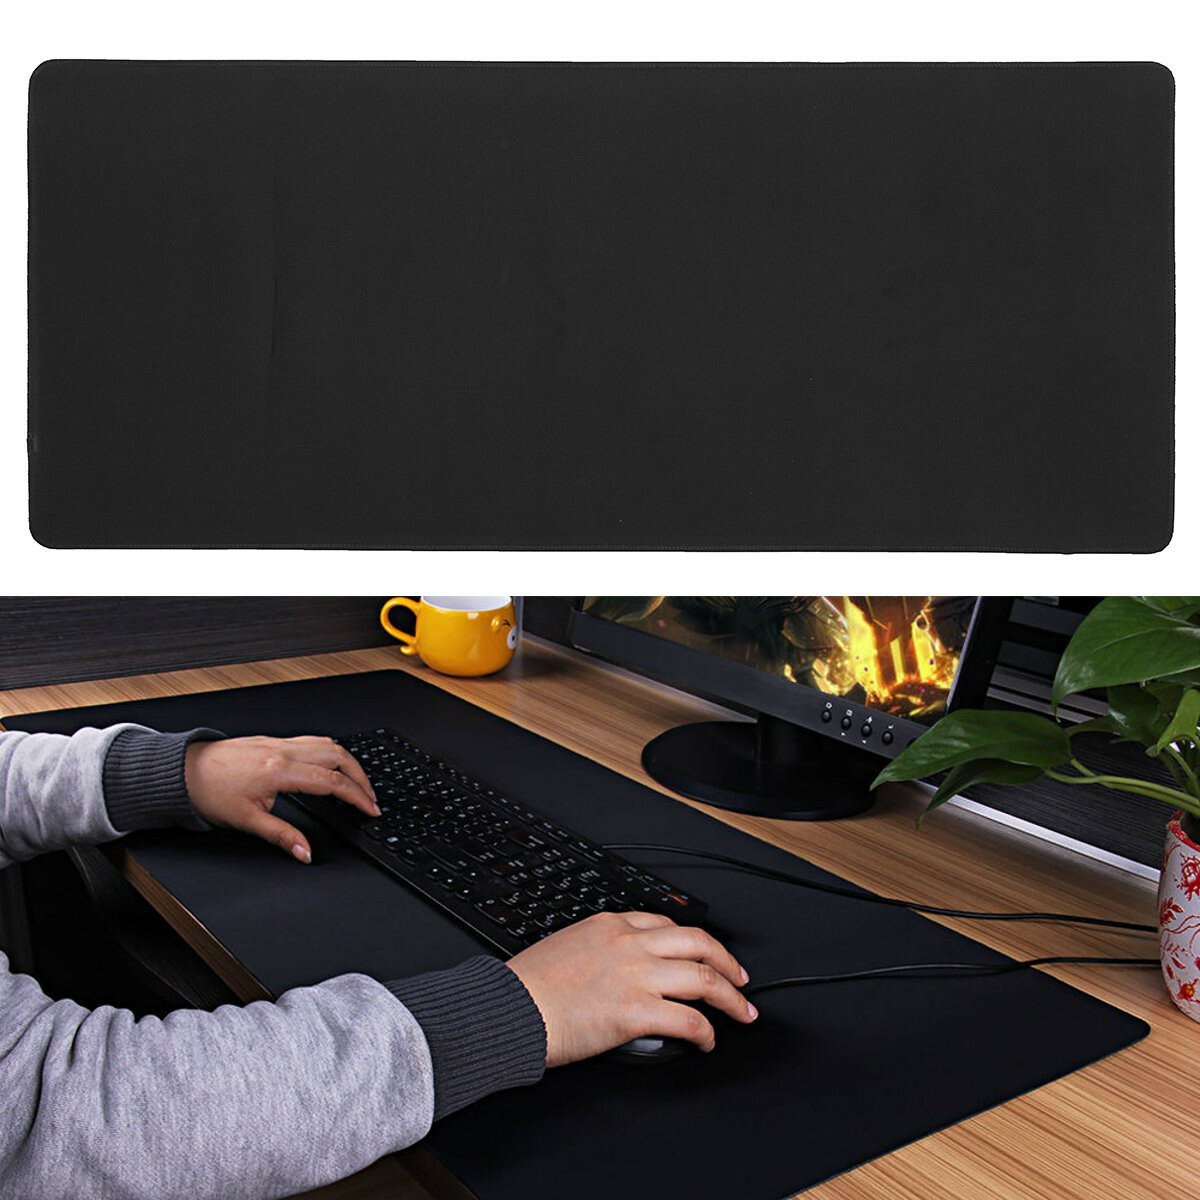 Large Gaming Mouse Pad Anti-Slip Mouse Pad Laptop Computer Office Keyboard Mat 